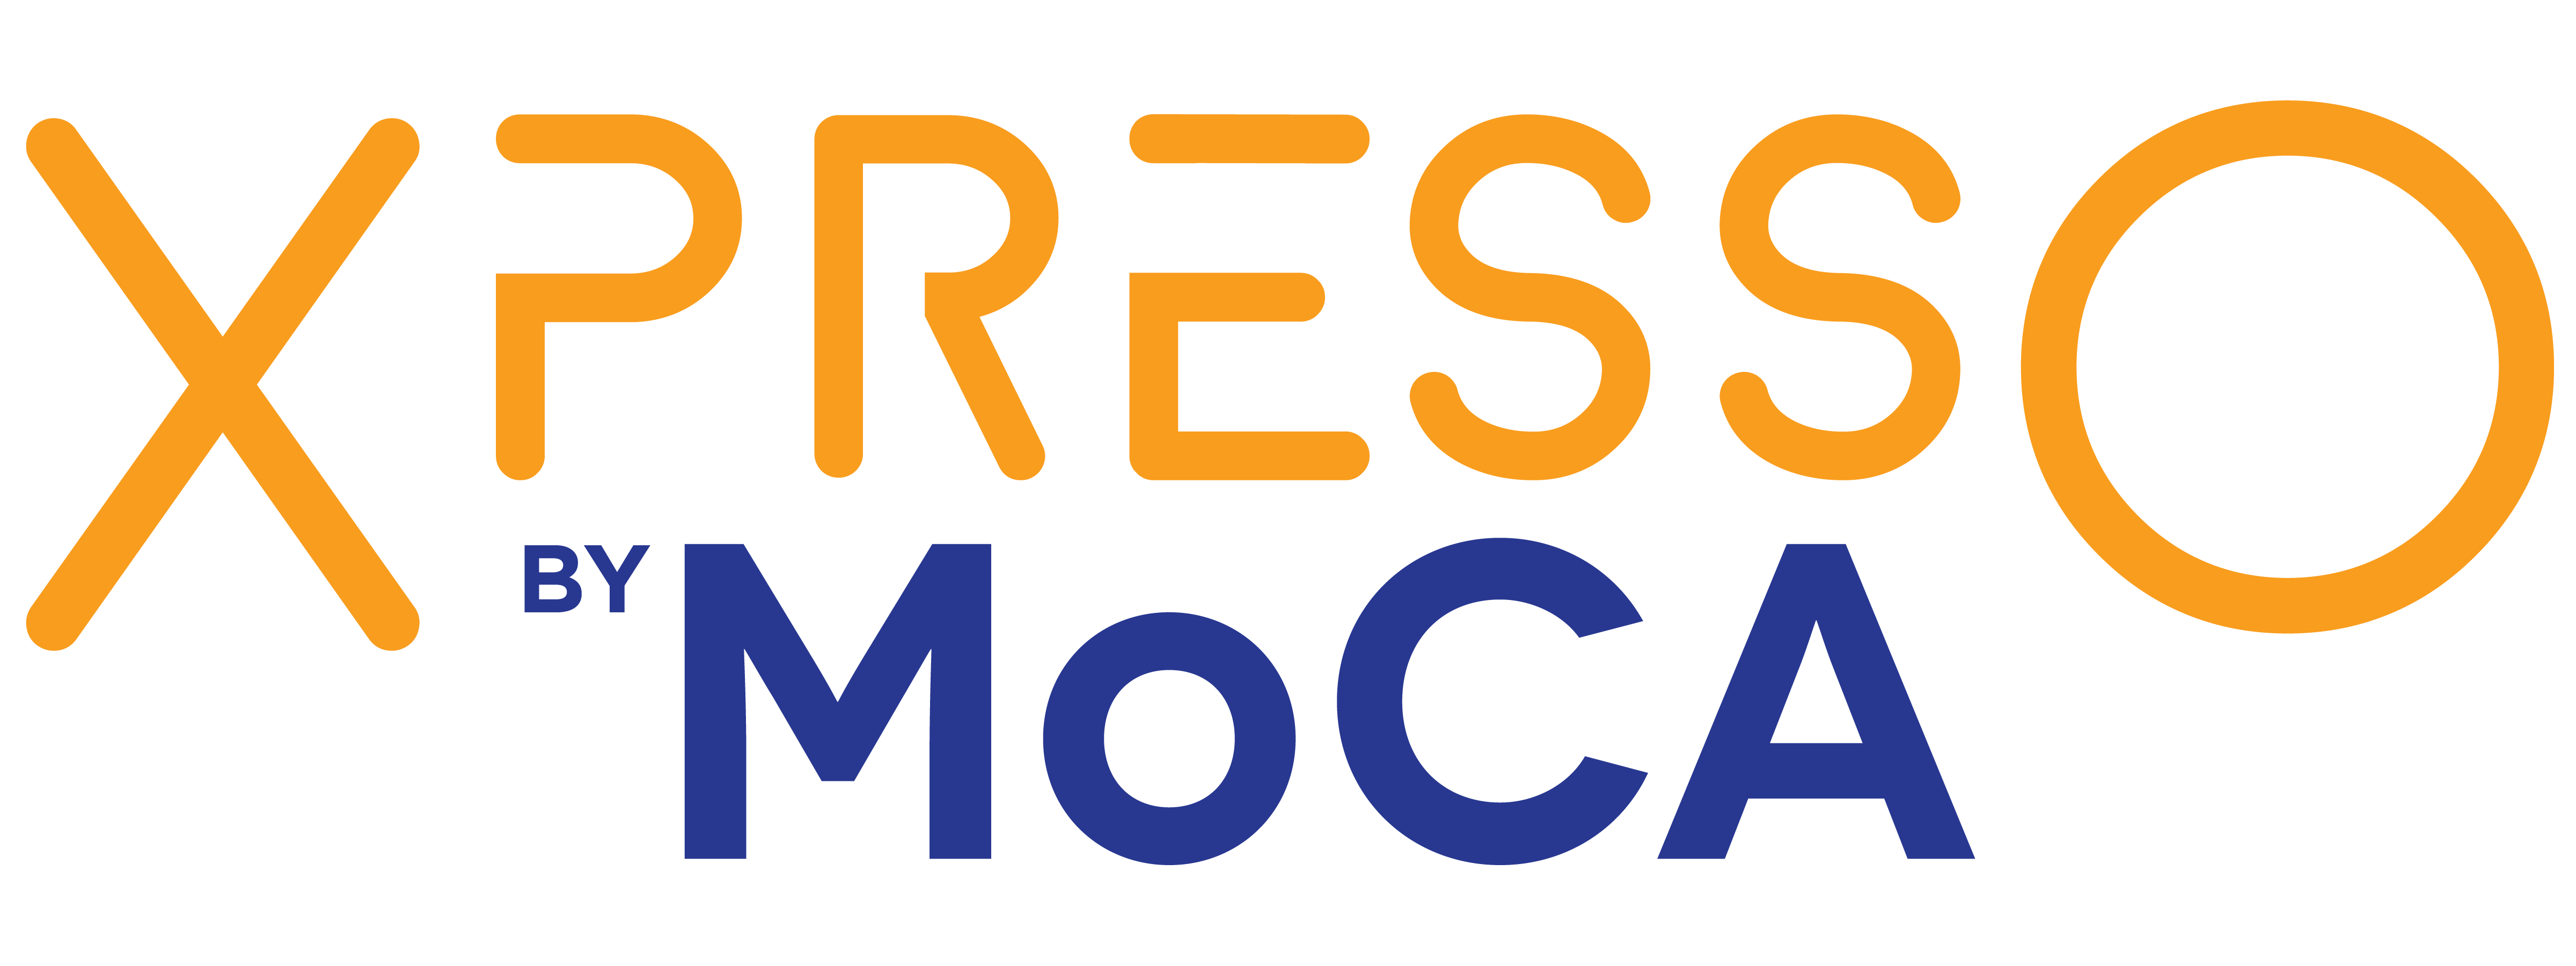 Moca Xpresso Logo